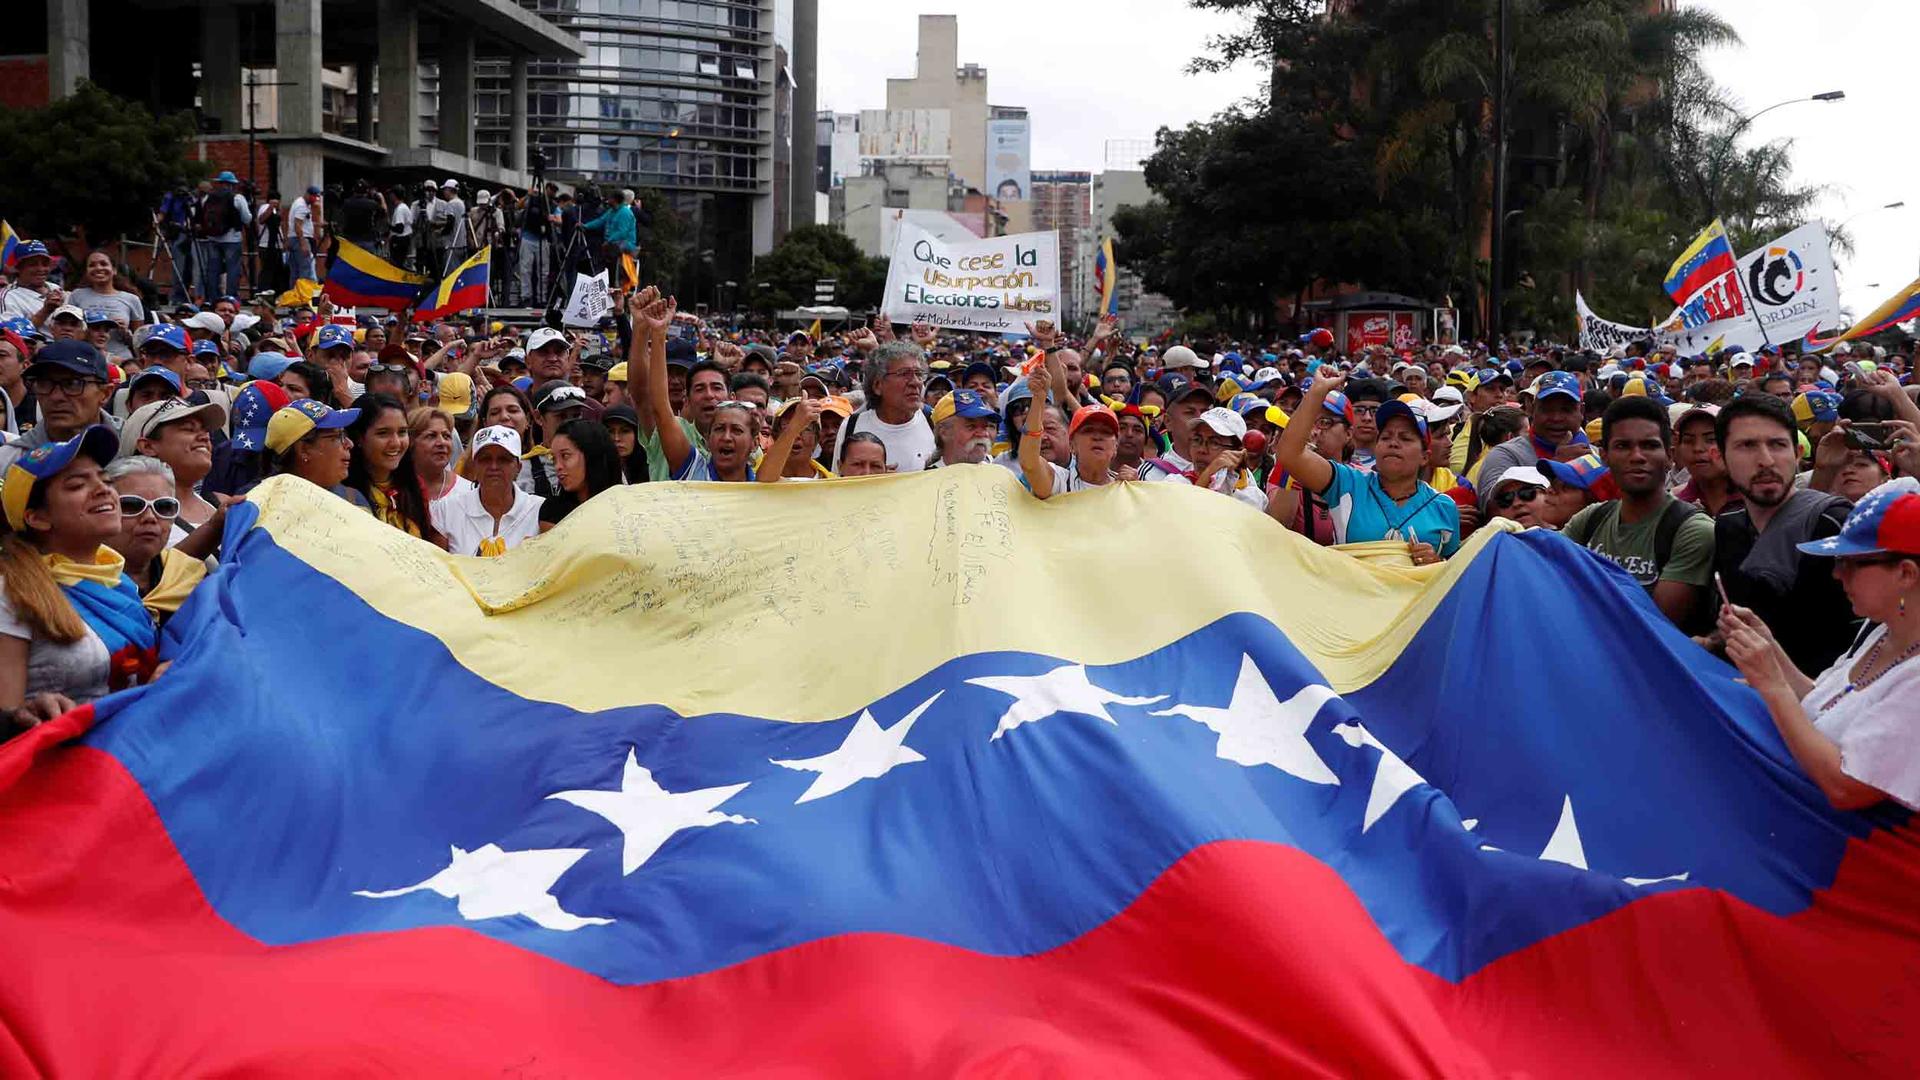 Hundreds of protests stand behind a massive Venezuelan flag